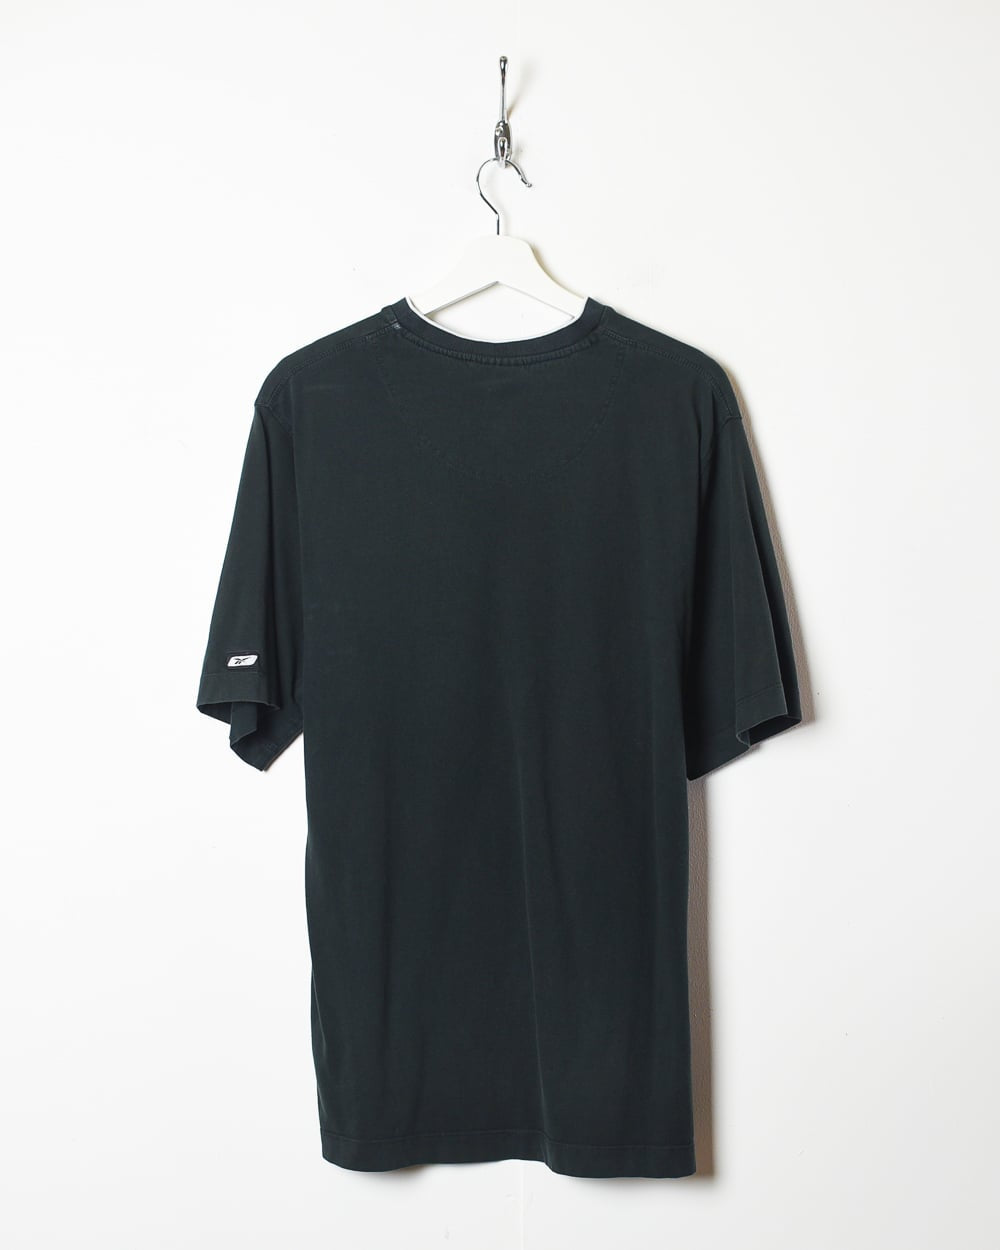 Black Reebok T-Shirt - Medium